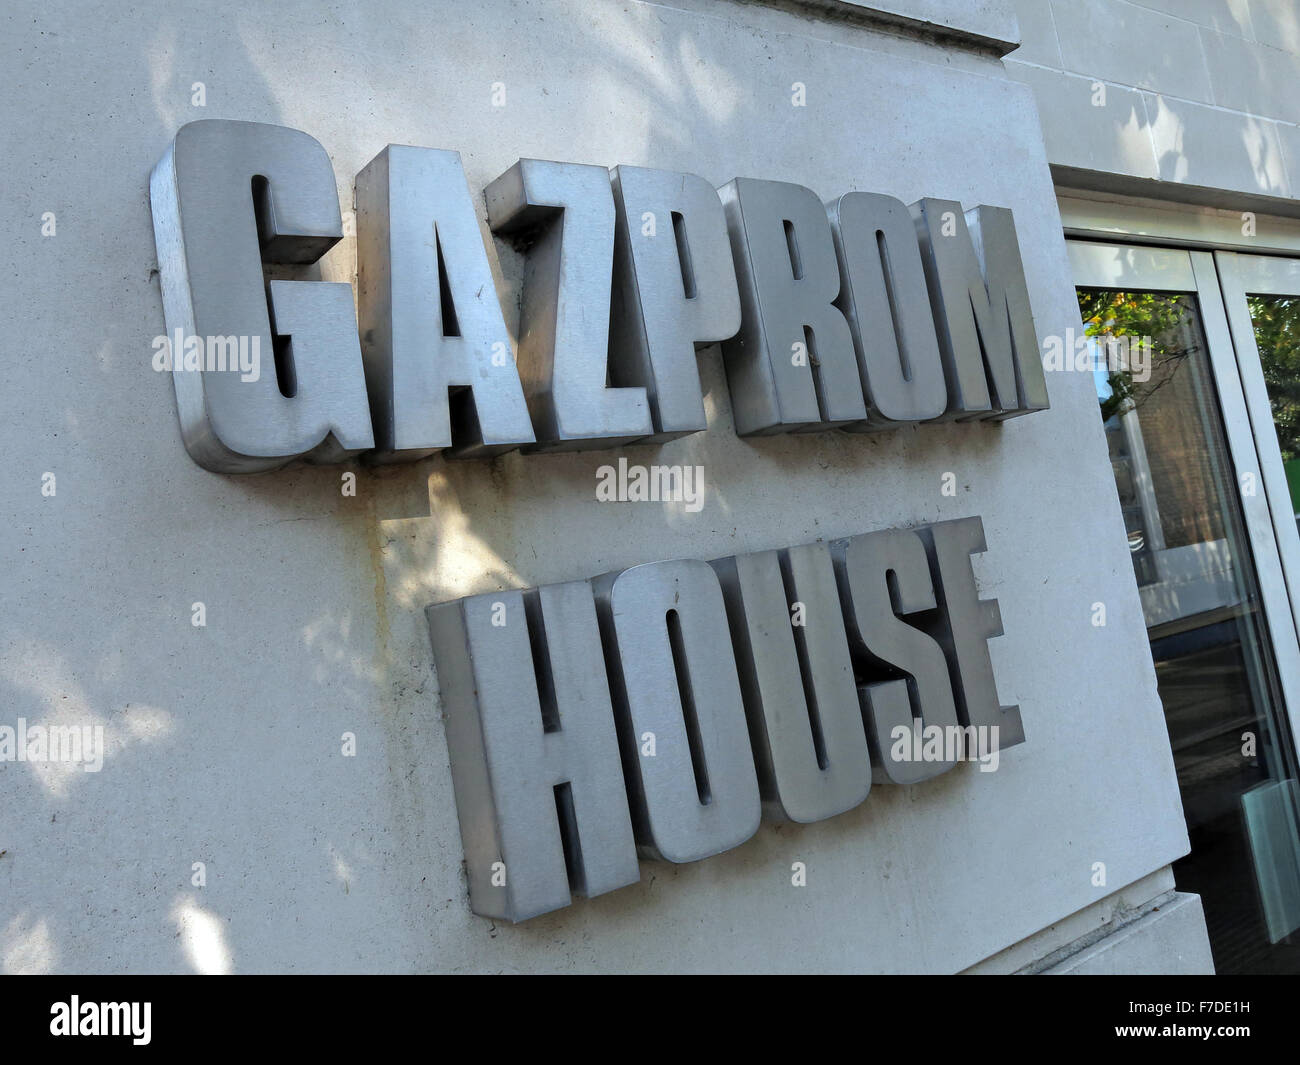 Gazprom House, Hampton Wick, Kingston, London, russisches Öl- und Gasunternehmen Stockfoto